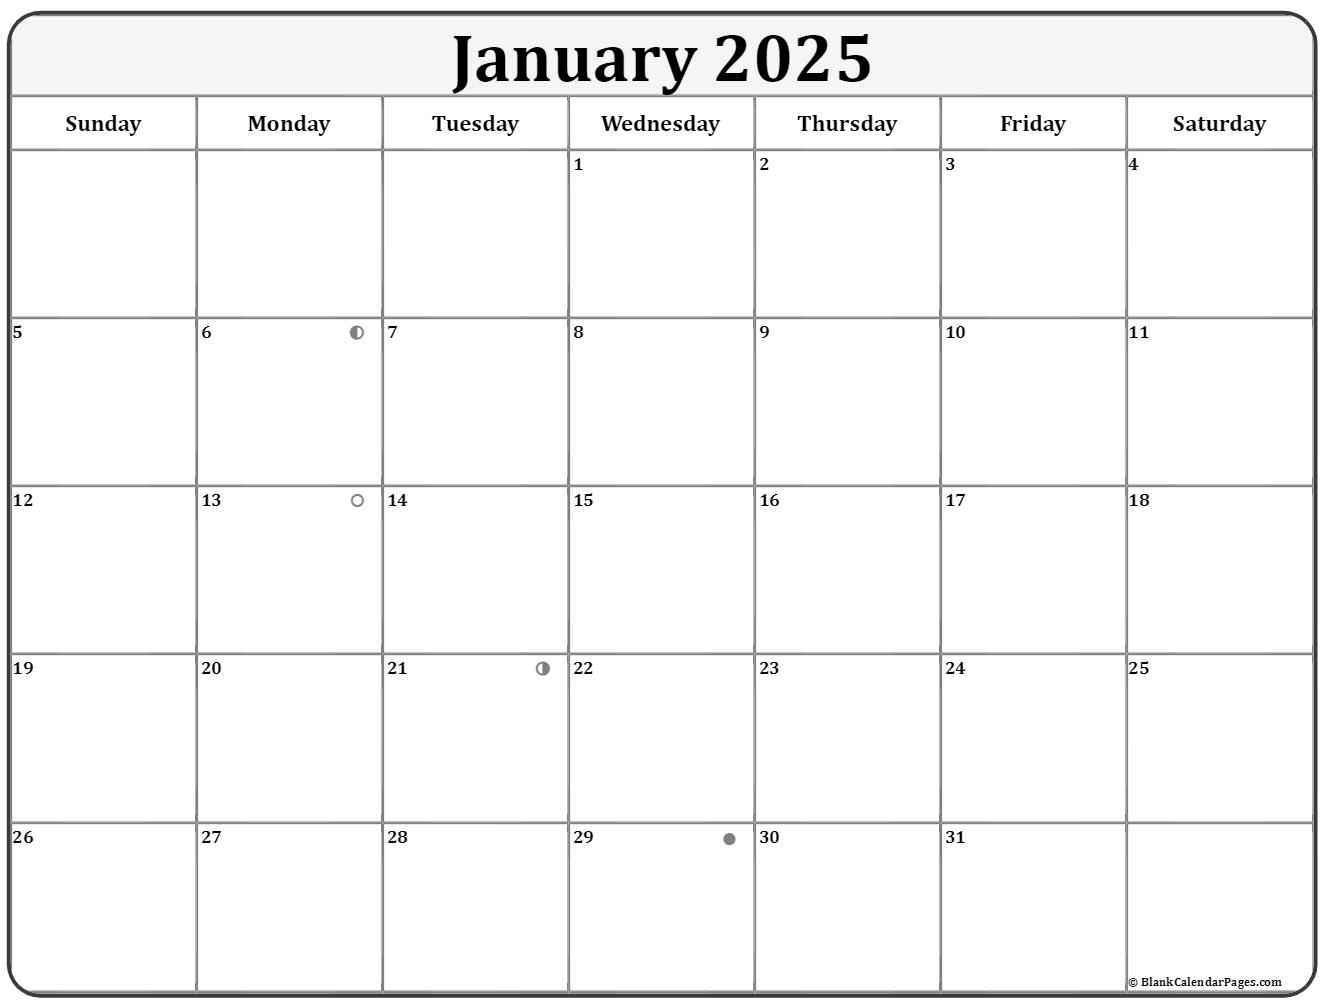 canada-january-2025-calendar-with-holidays